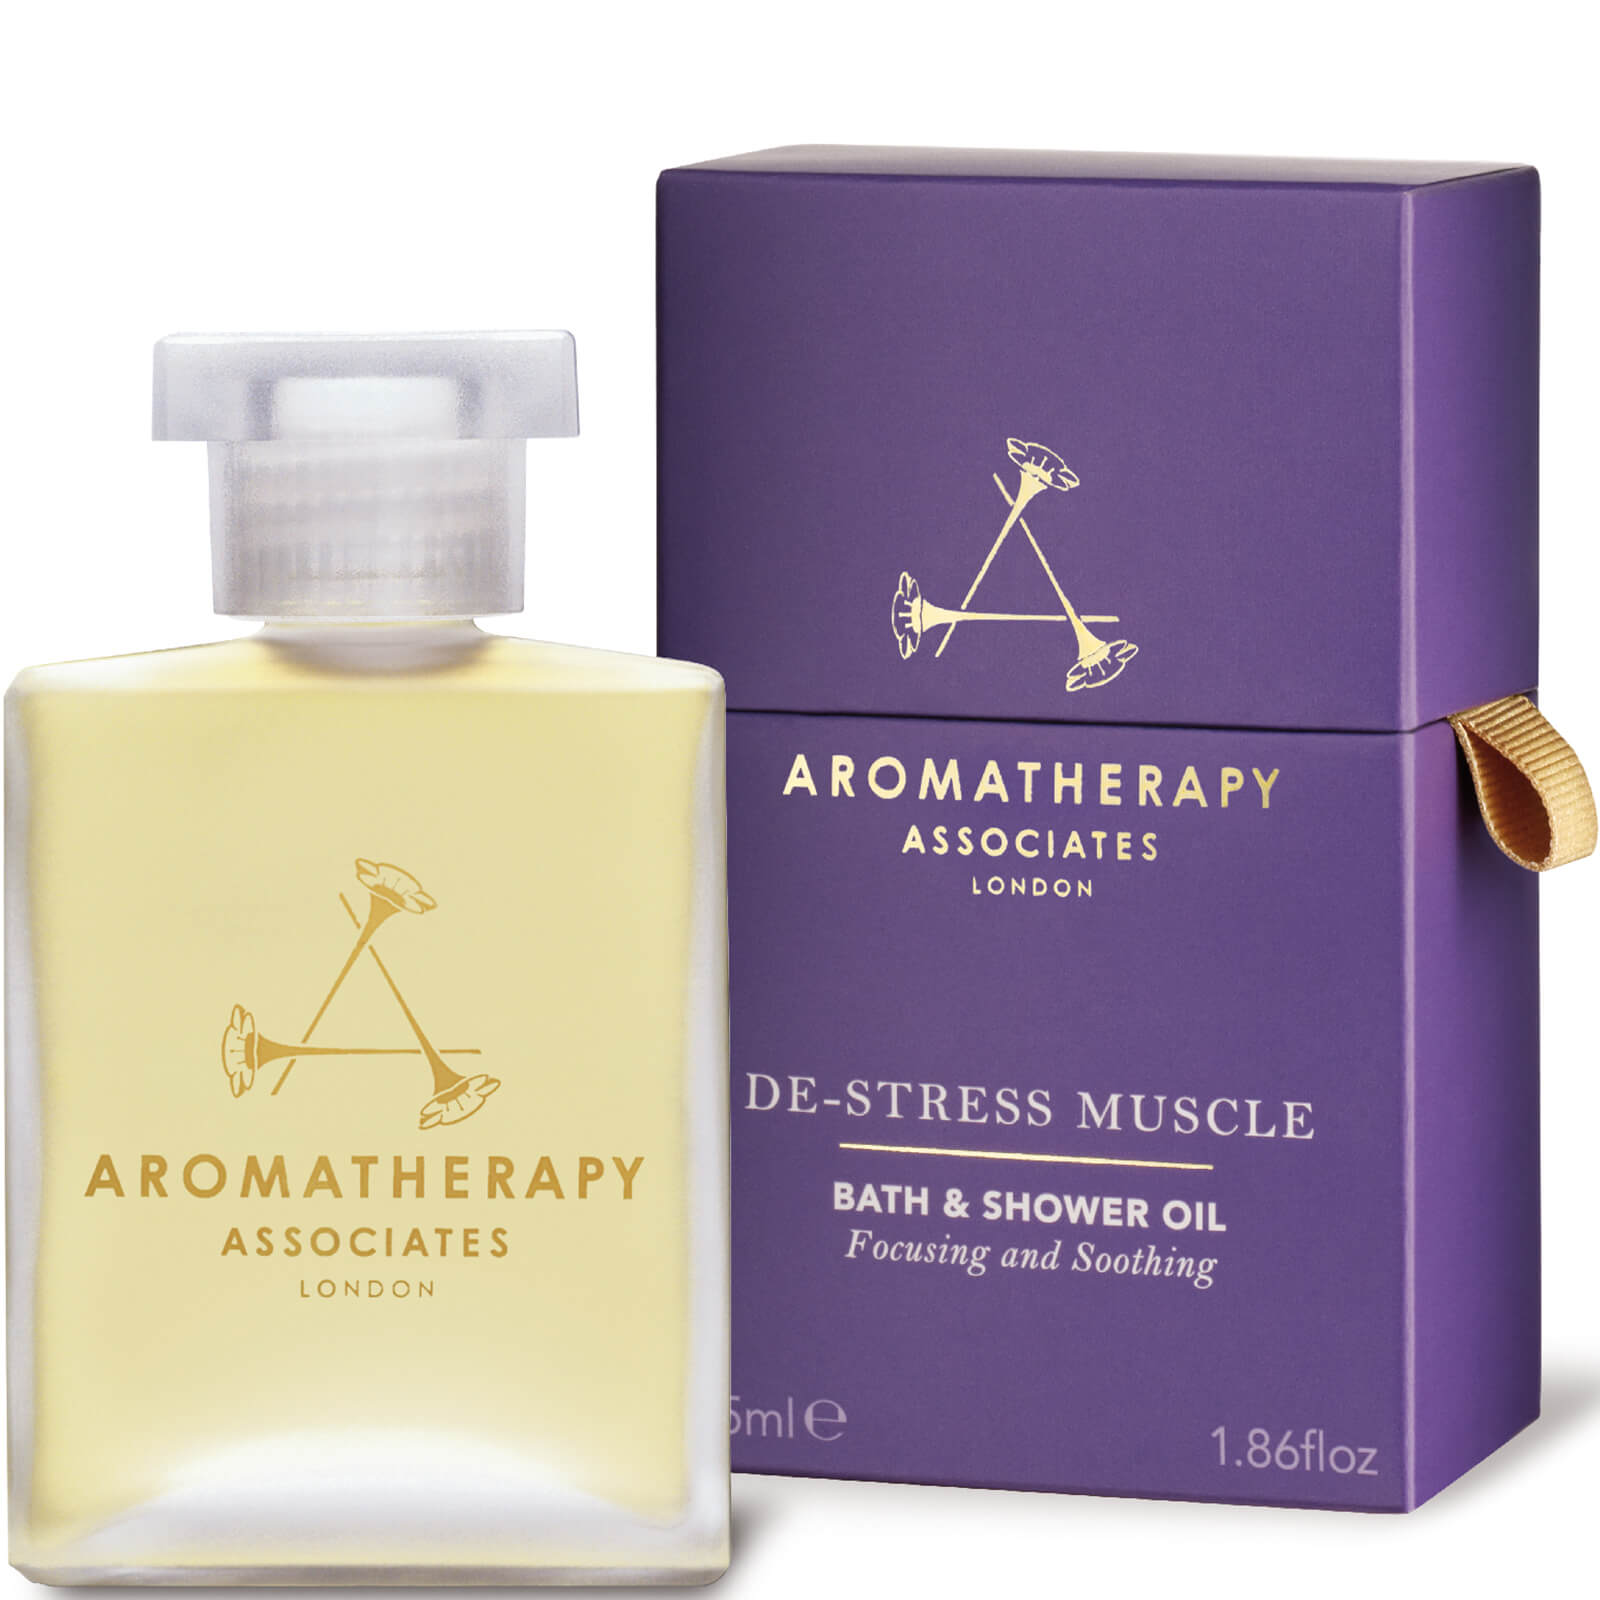 Aromatherapy Associates De-stress Muscle Bath & Shower Oil 3ml In Neutral